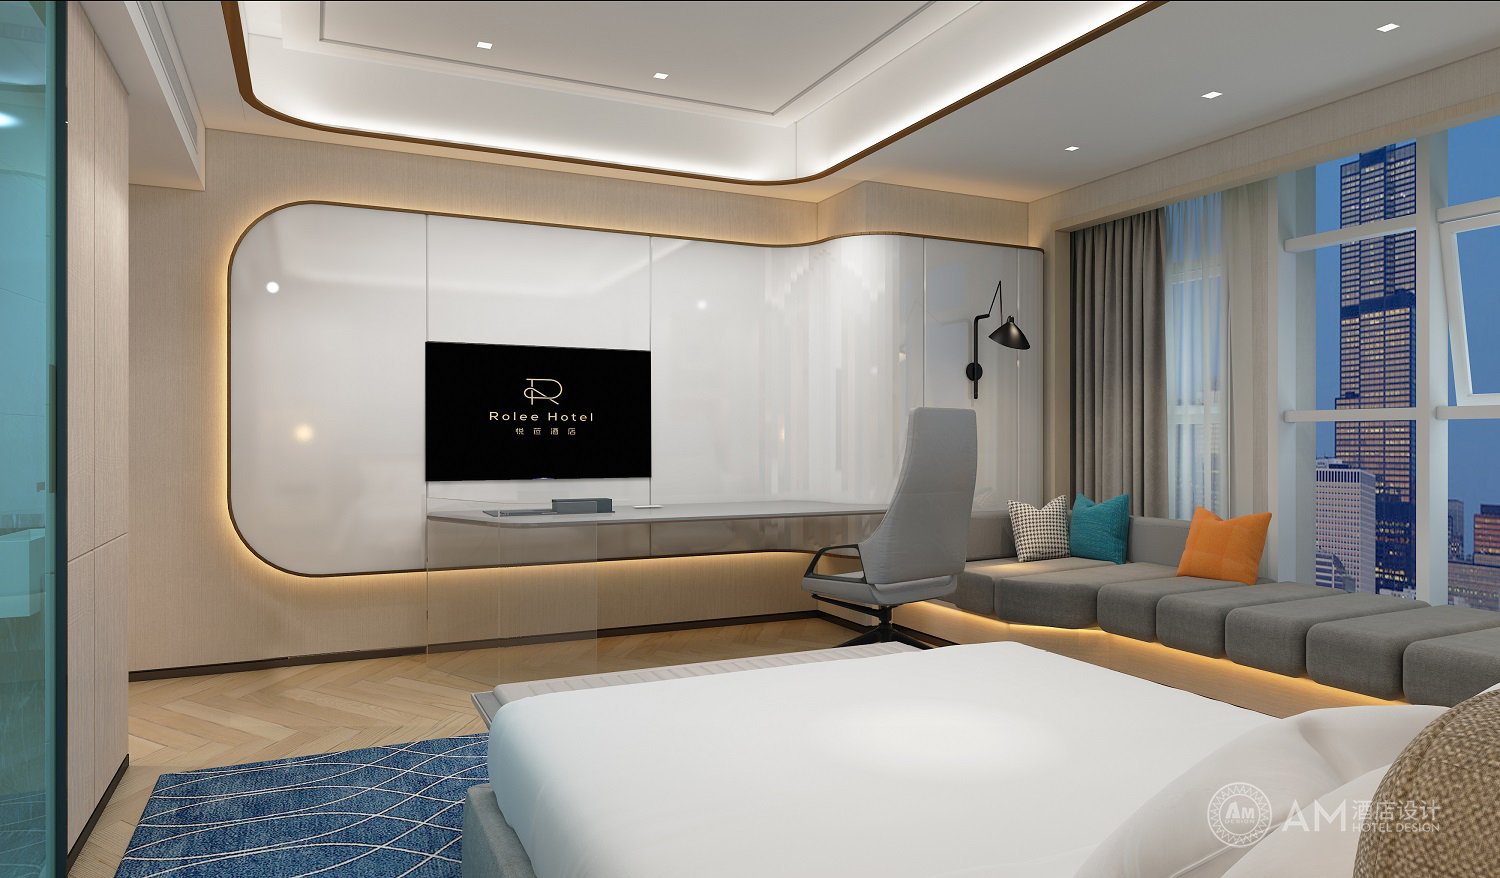 Xi'an Yue-li Hotel Suite design